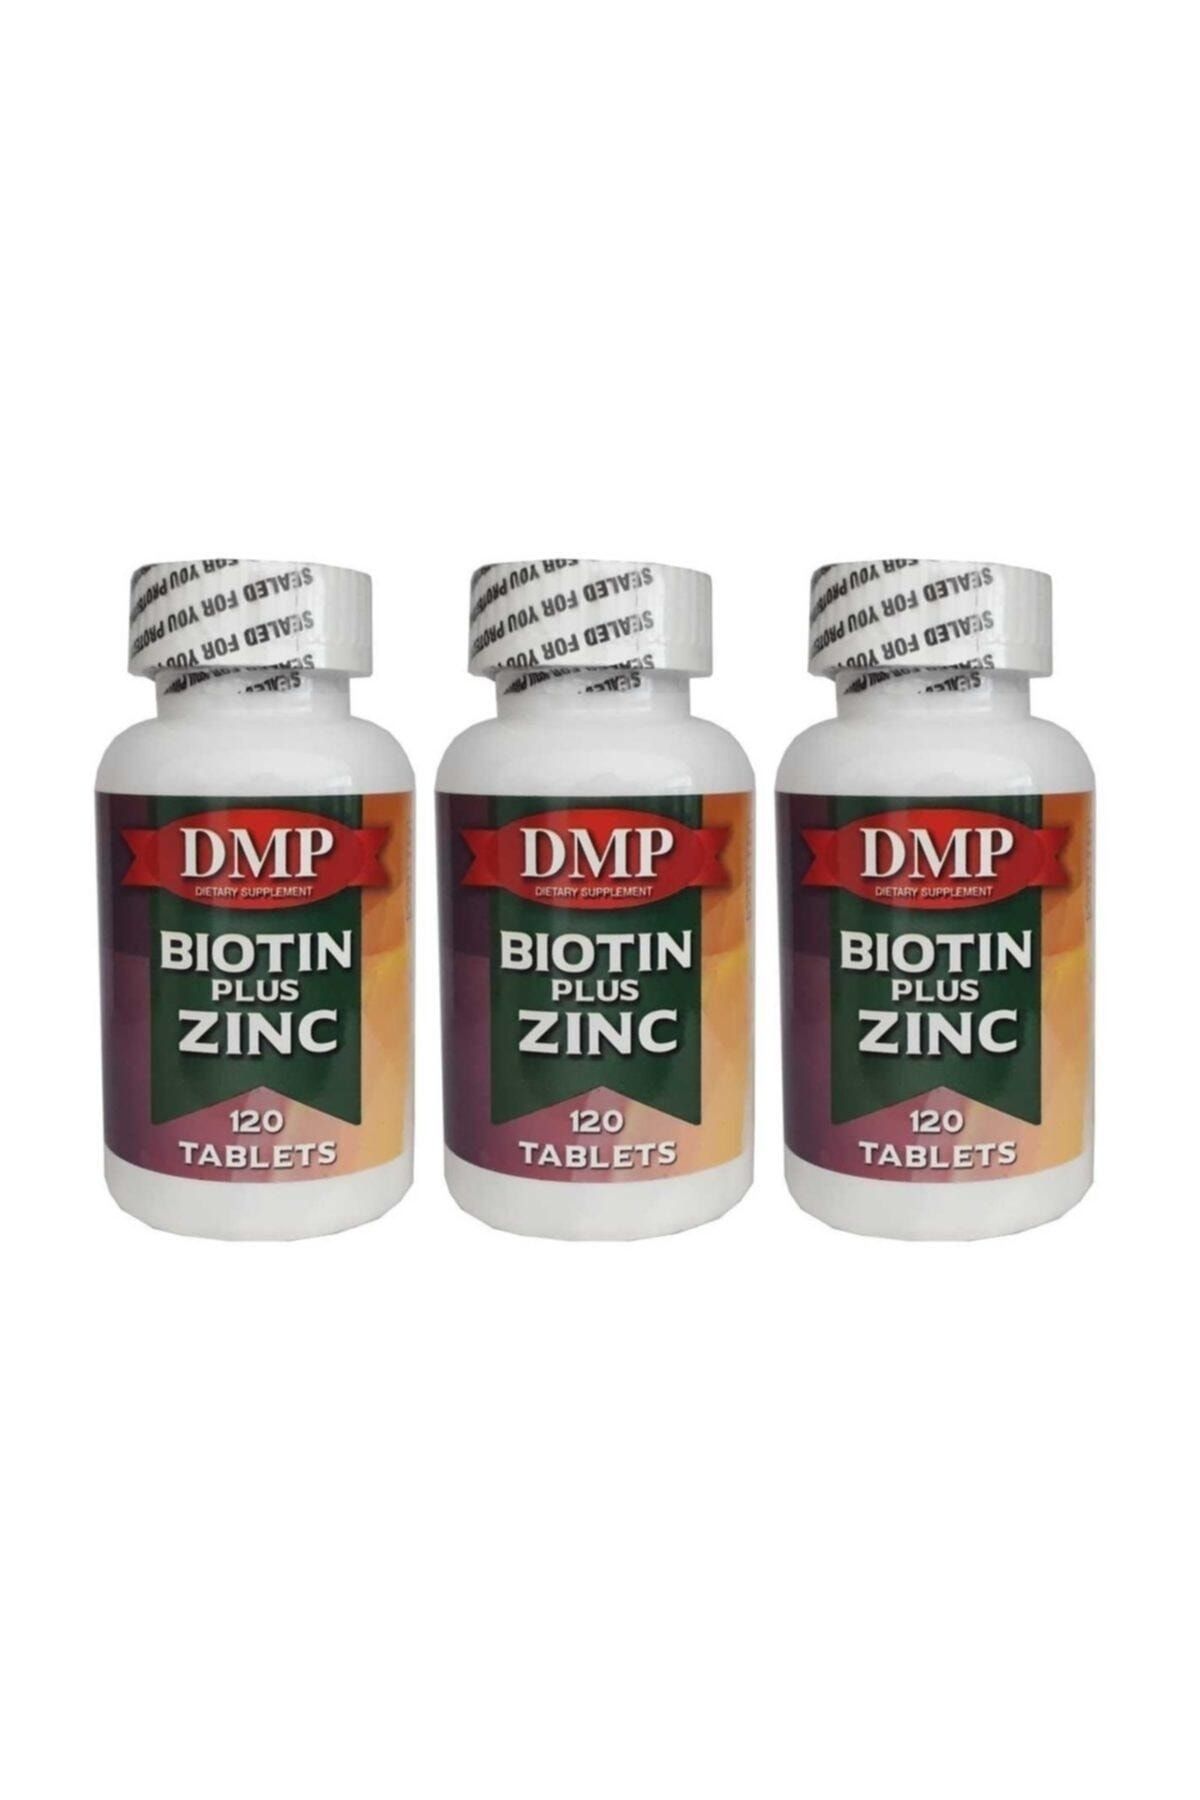 DMP Biotin Plus Zinc 3 Kutu Toplam 360 Tablet Biyotin